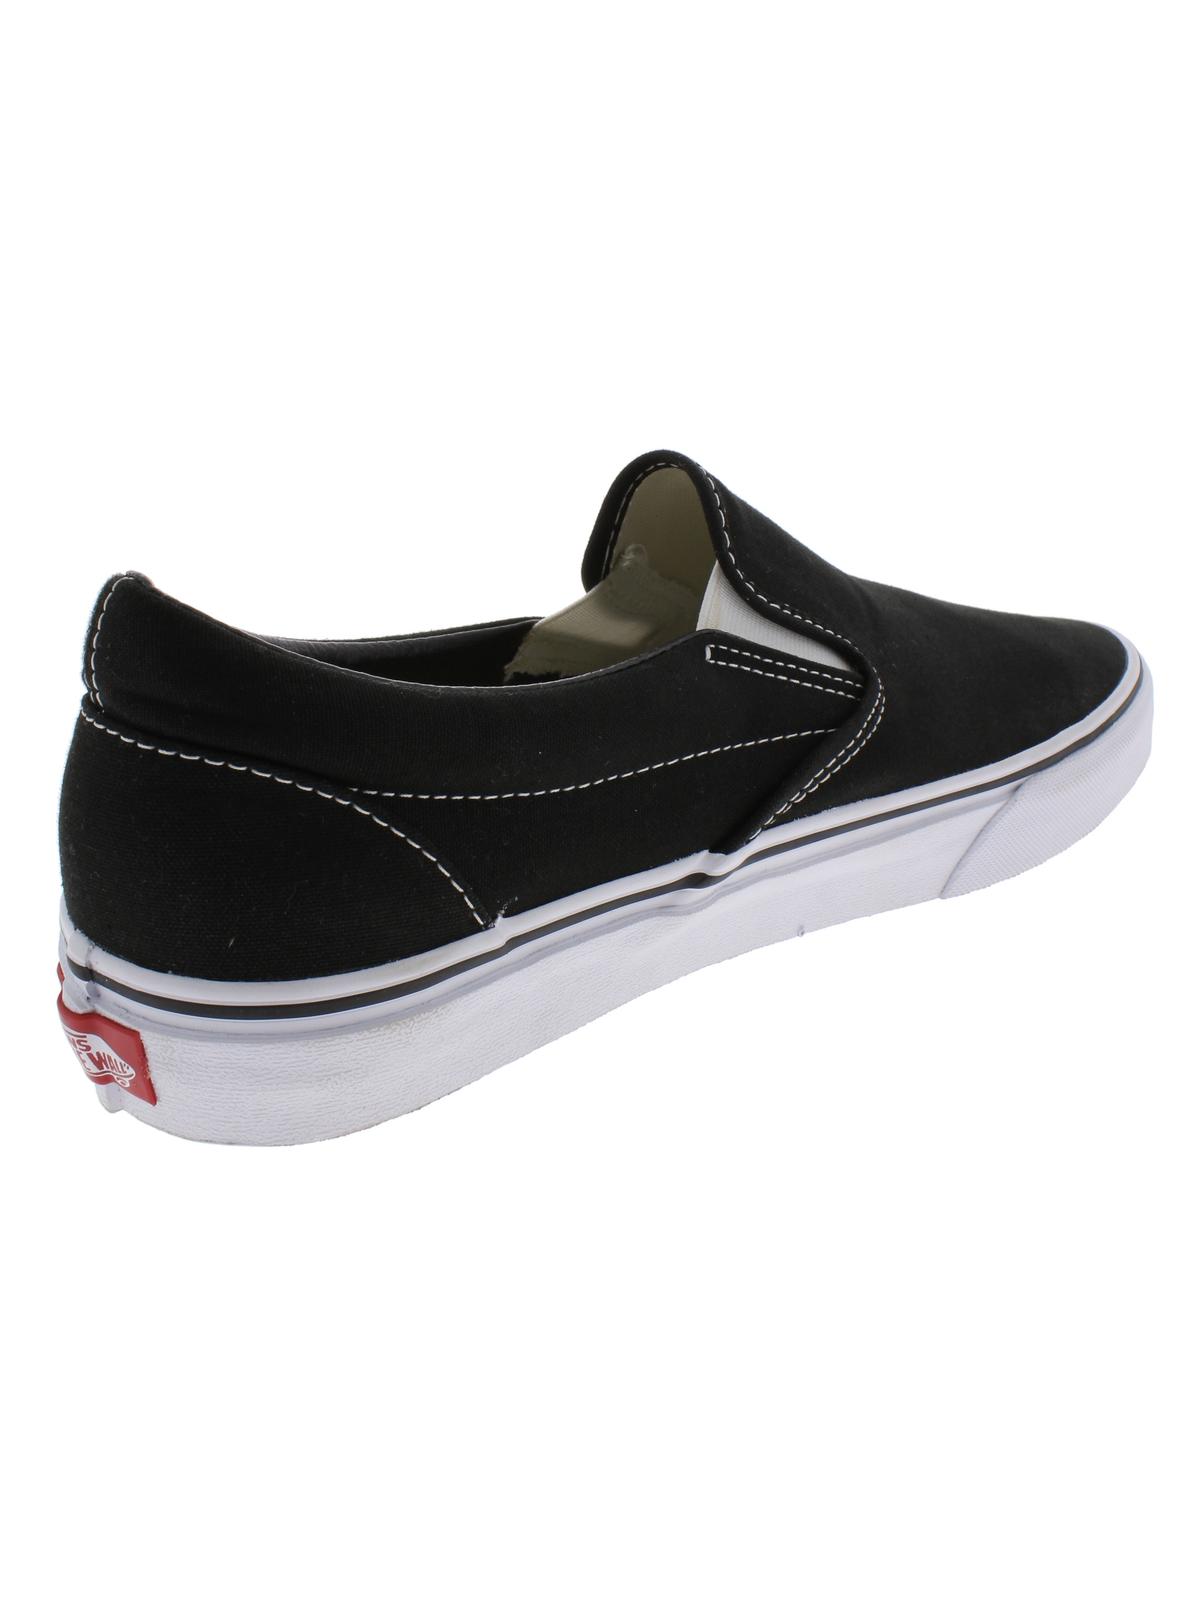 Vans Mens Classic Slip-On Canvas Low Top Casual Shoes Black 13 Medium (D) - image 2 of 2